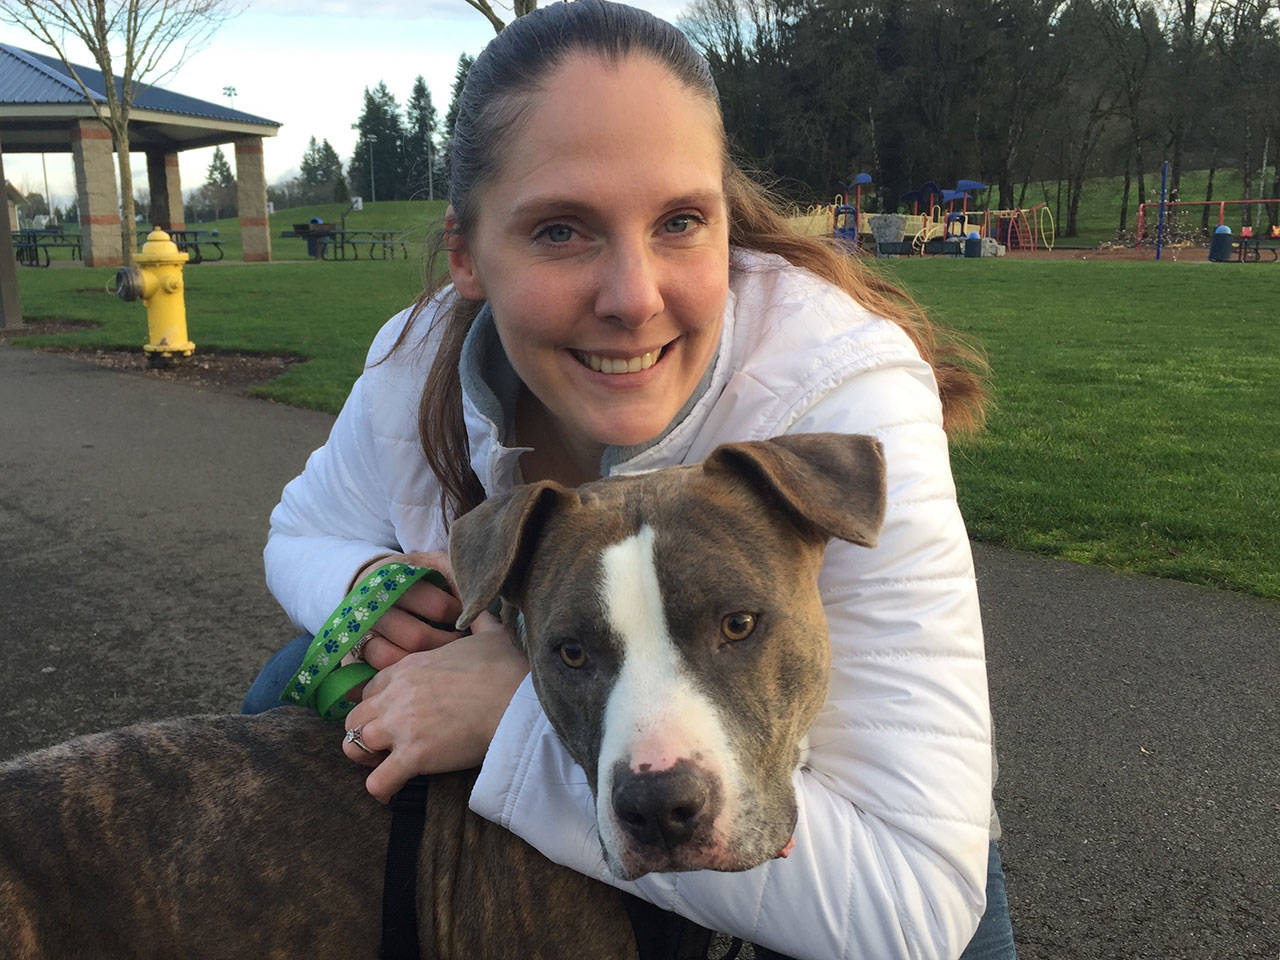 Kim Hopkins was reunited Dec. 4 with her dog Deuce after six years apart. (Lisa Pemberton /The Olympian via AP)